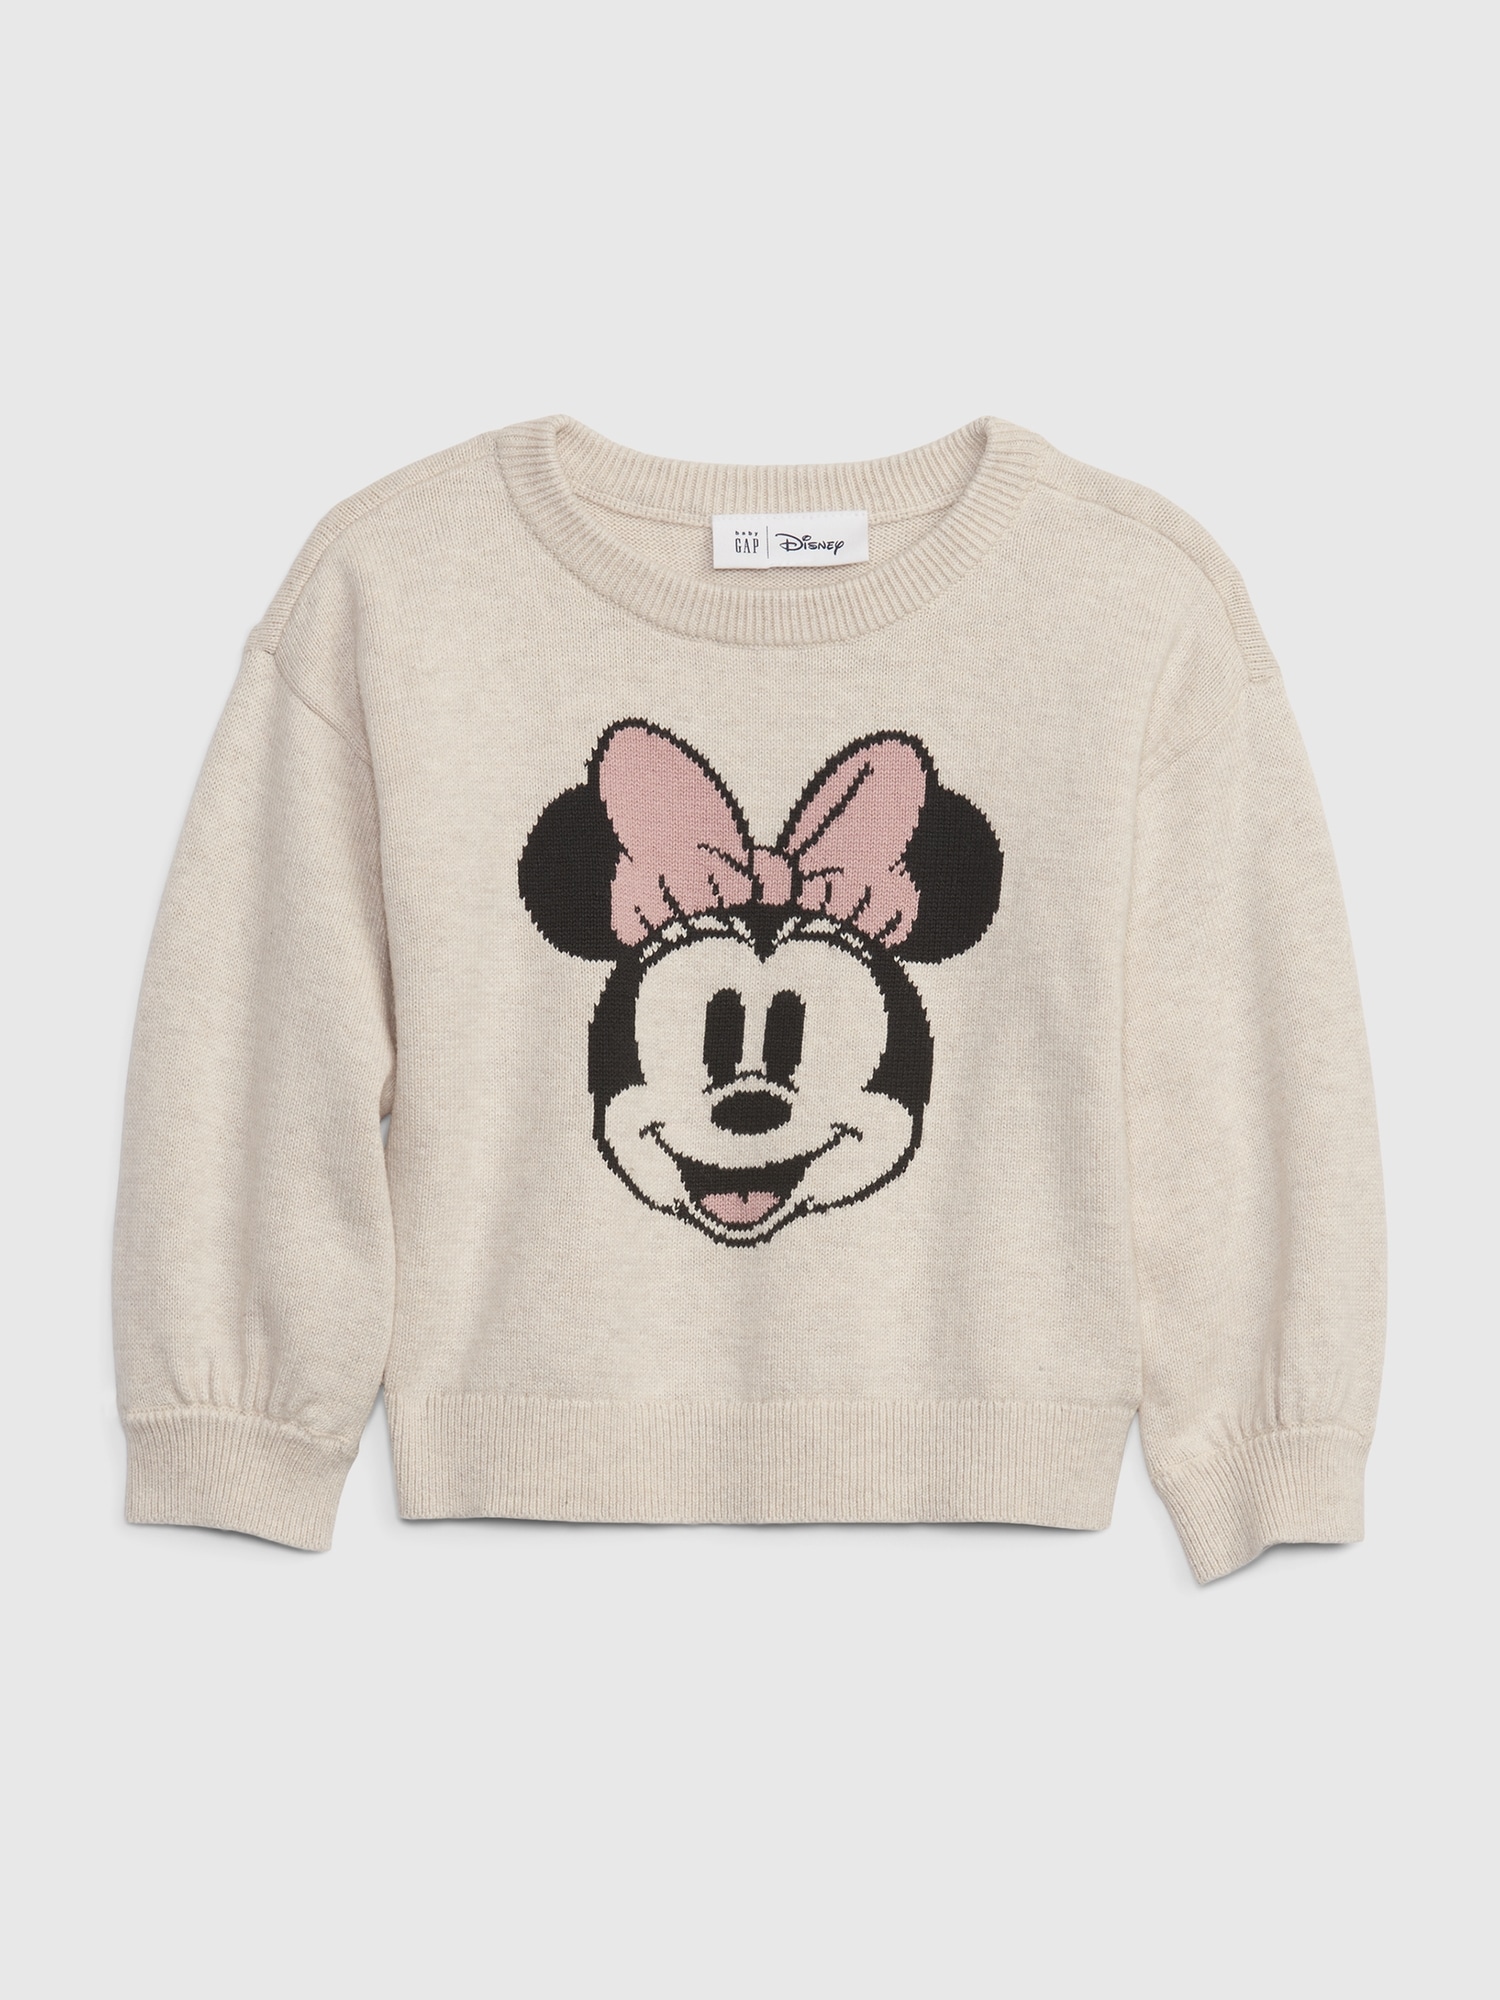 babyGap | Disney Minnie Mouse Sweater